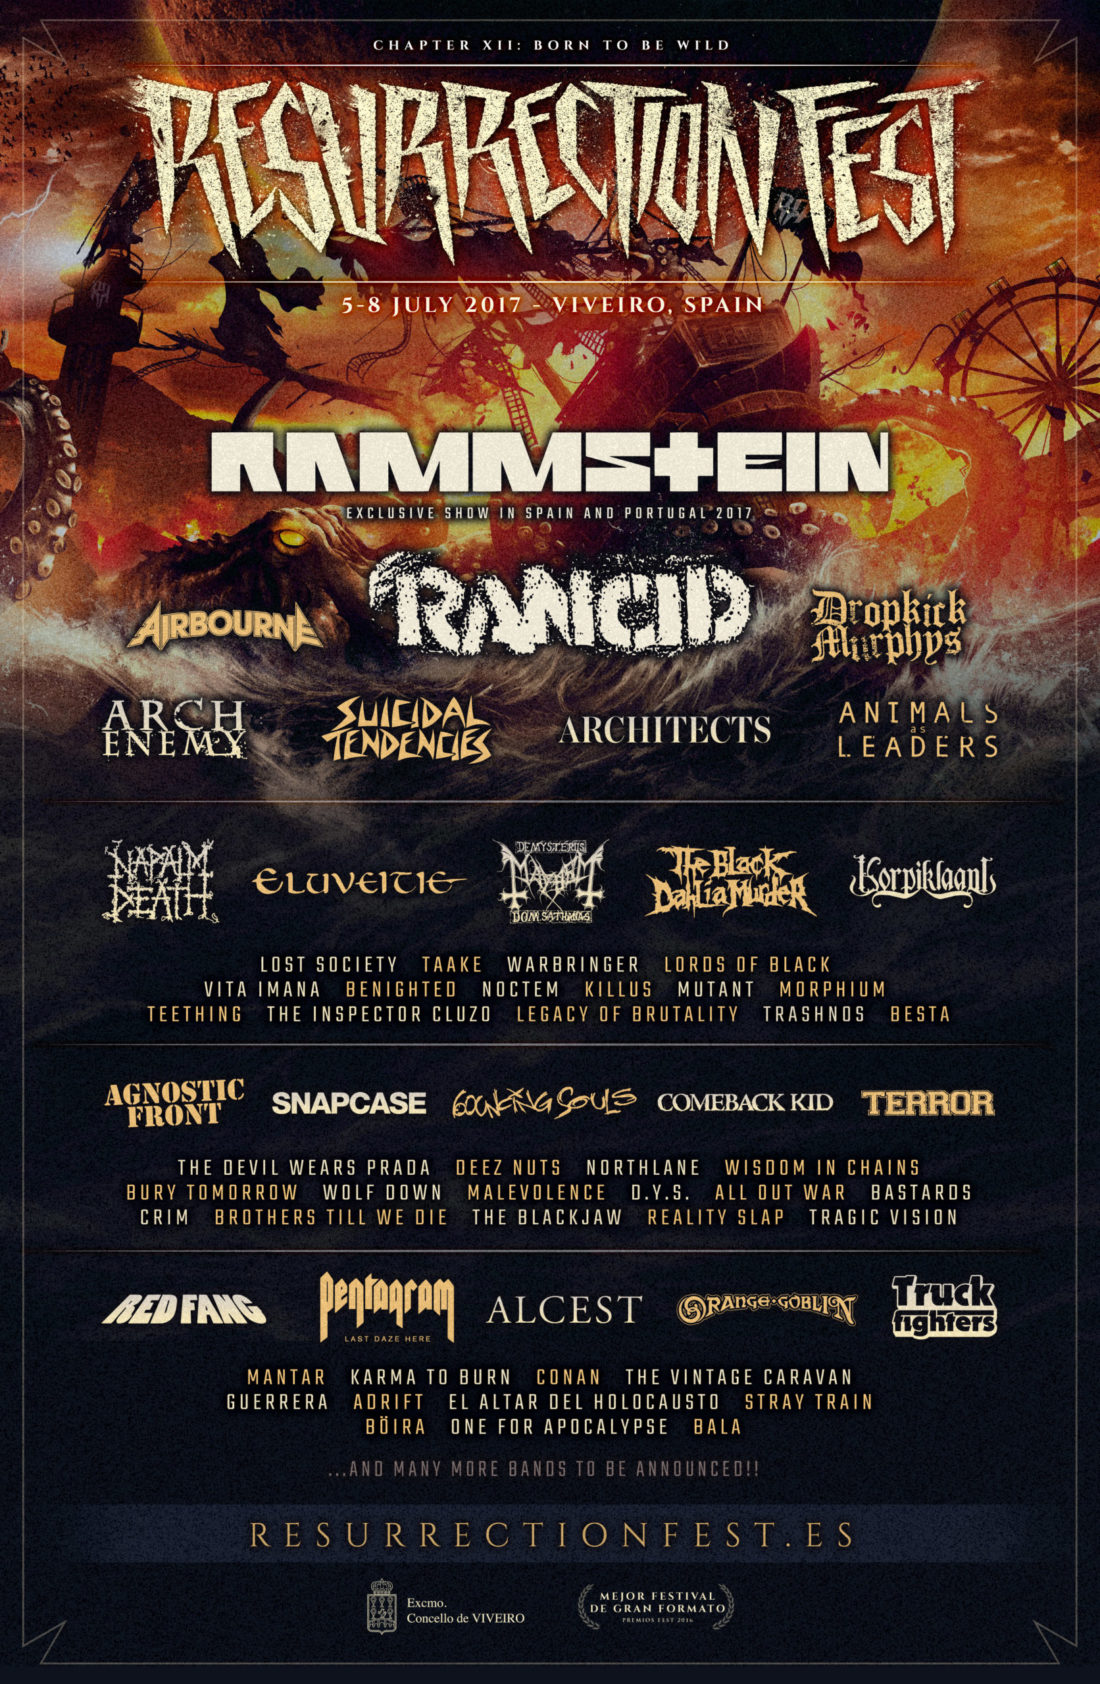 Rammstein and Rancid, headliners of Resurrection Fest 2017